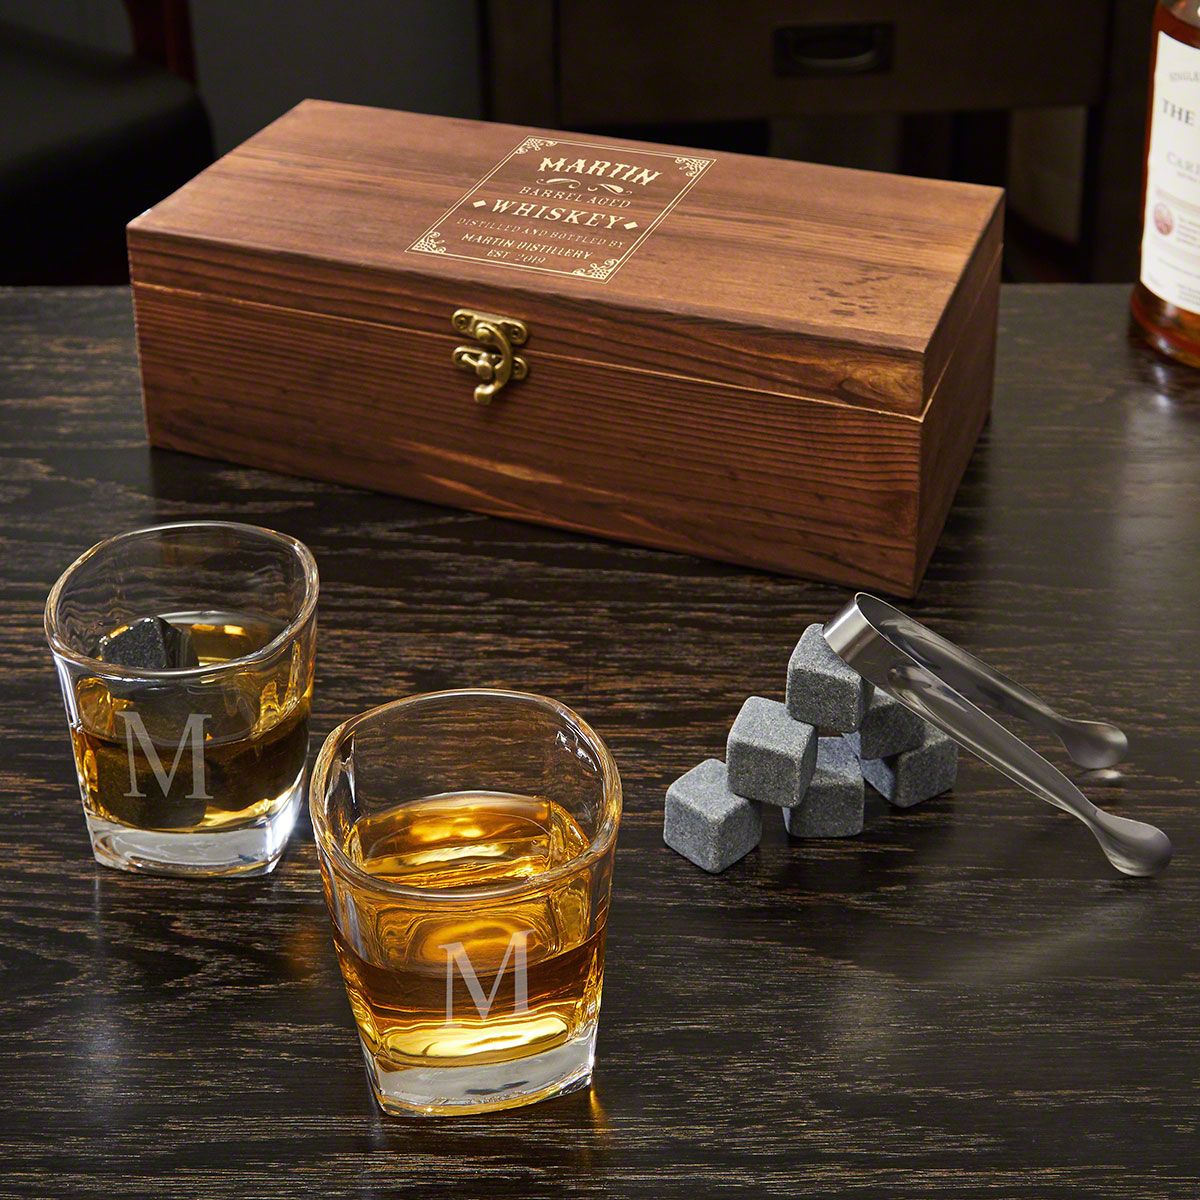 Stillhouse Engraved Shot Glass and Whiskey Stones Wooden Box Gift Set
